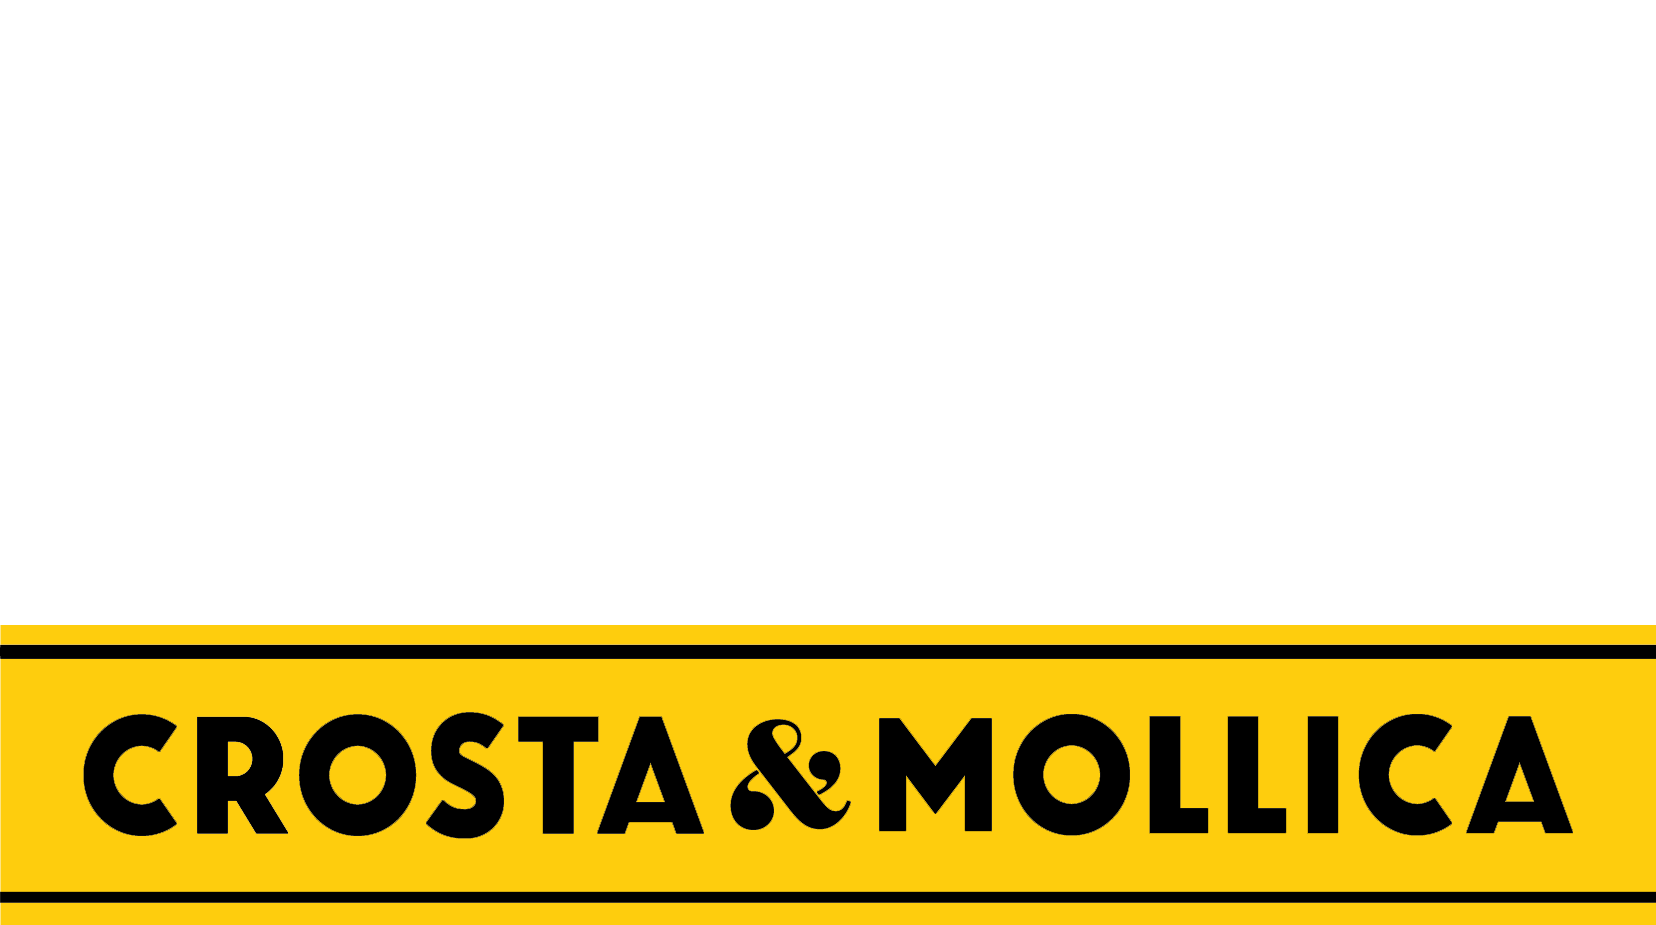 Crosta & Mollica logo